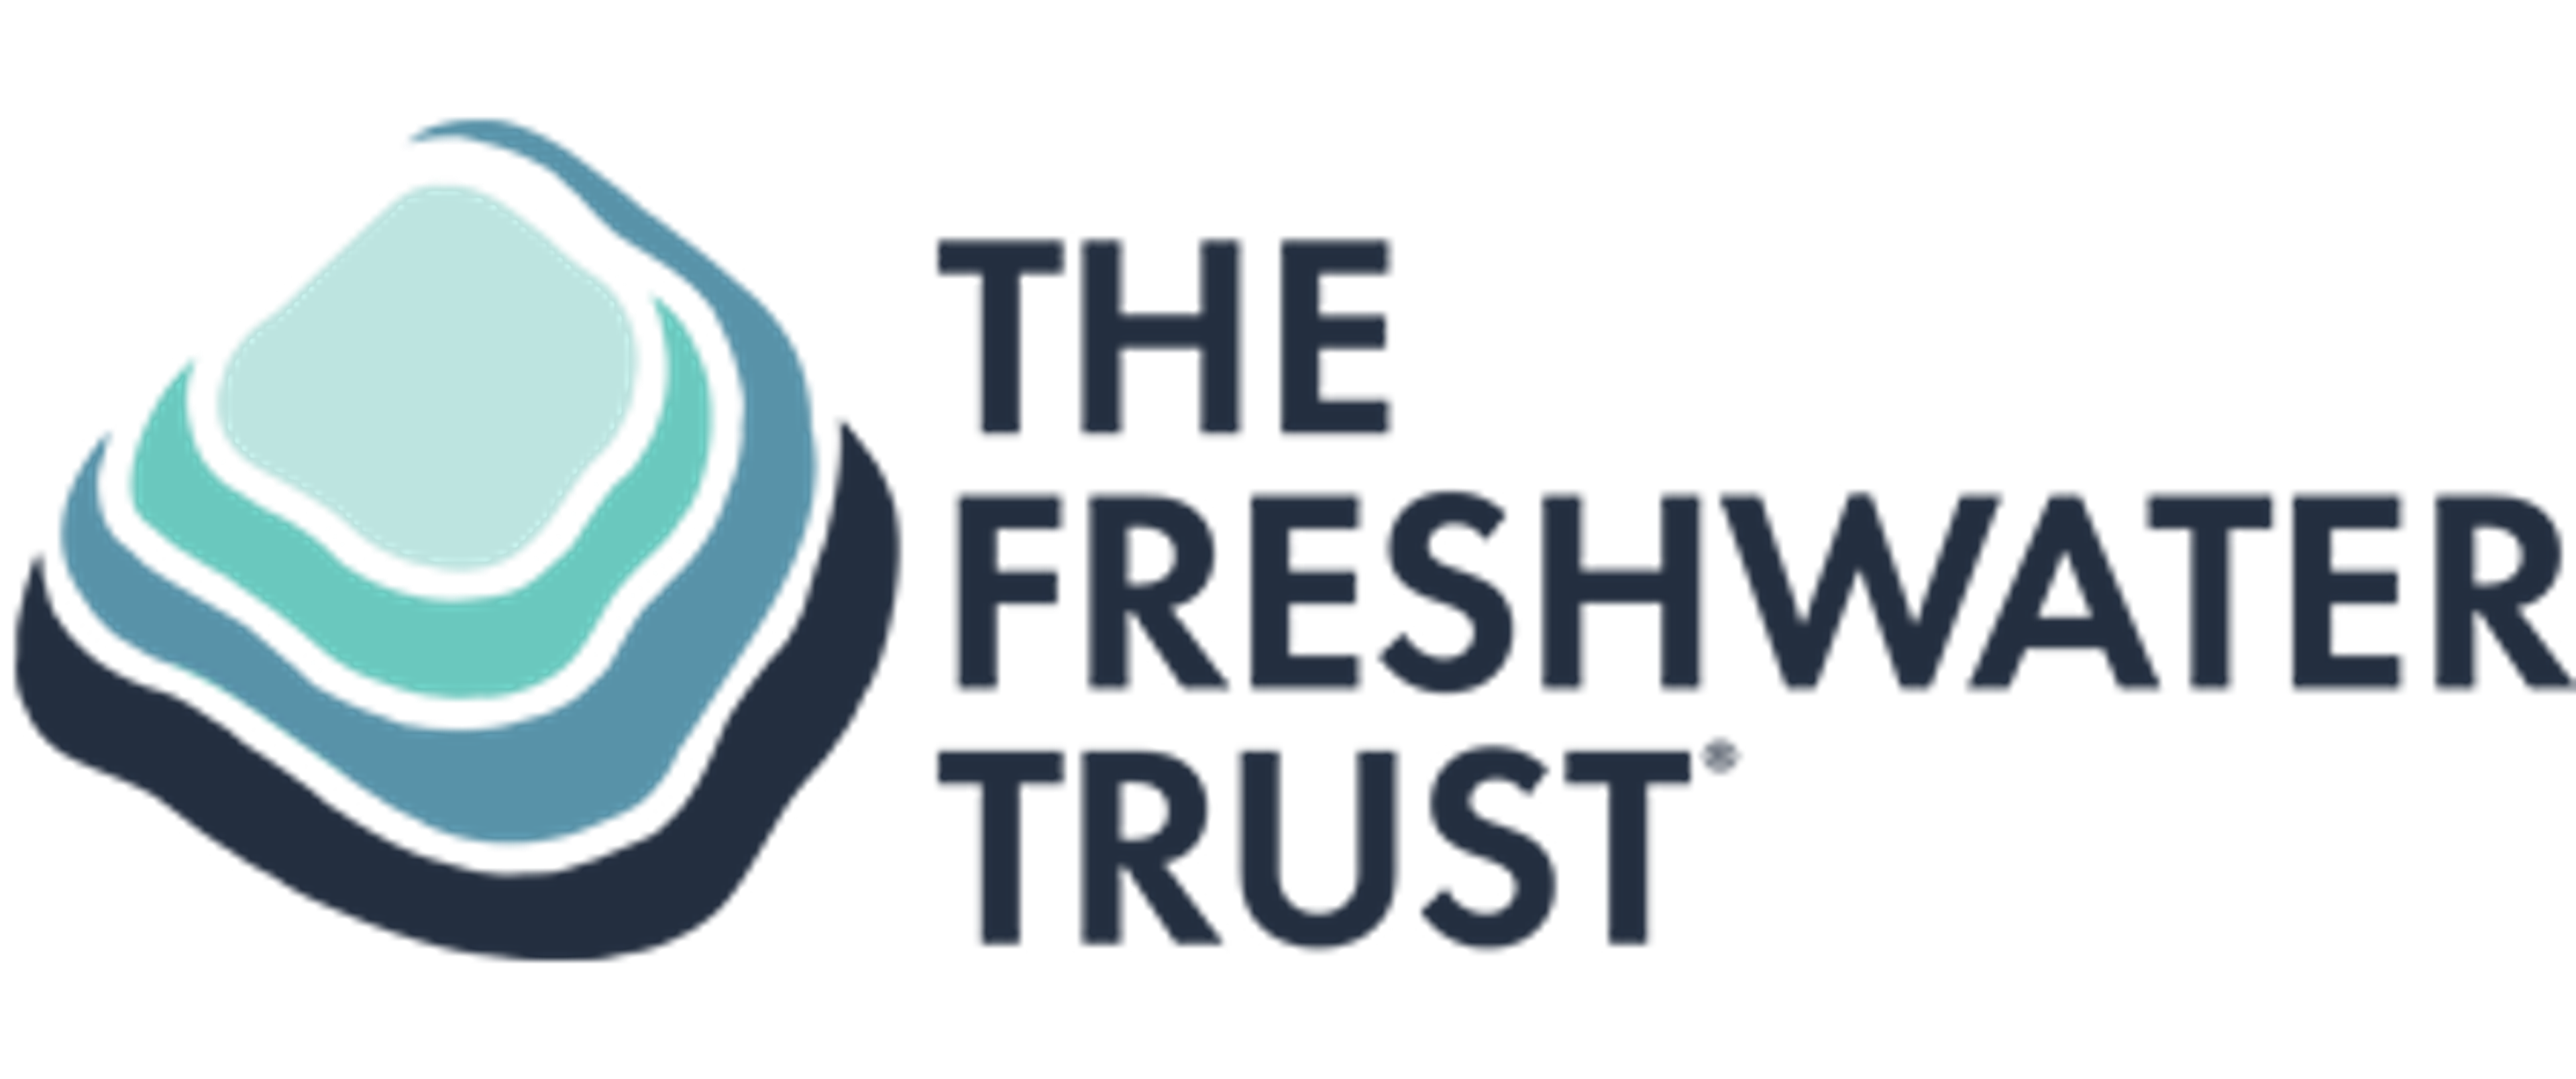 The Freshwater Trust logo.